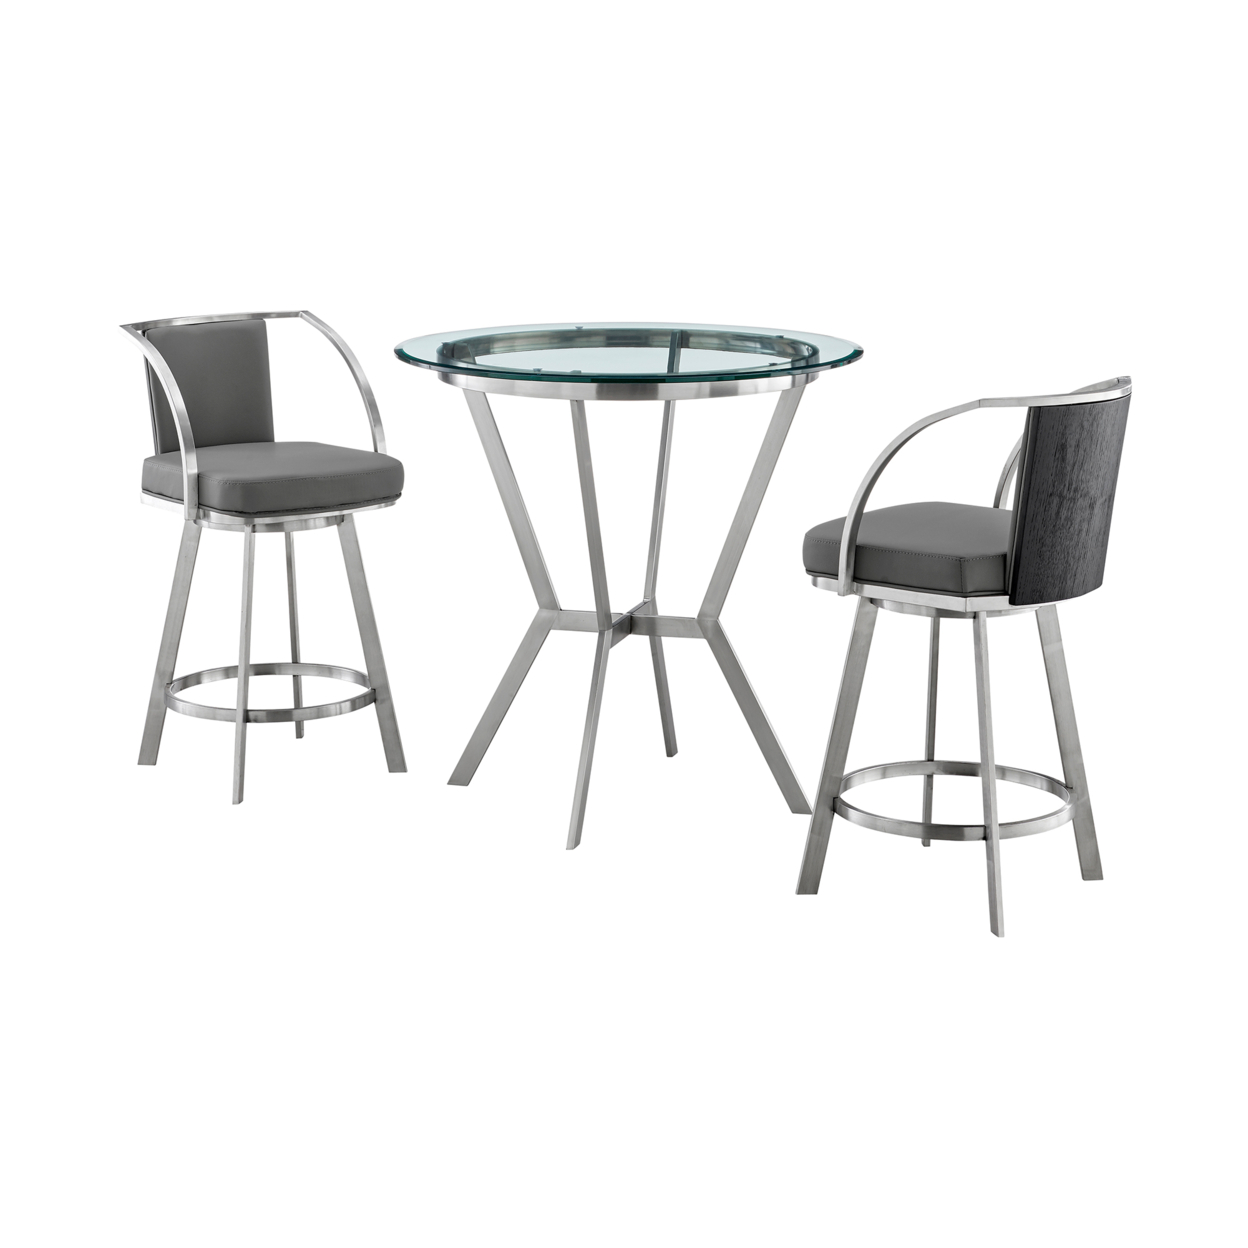 Lois 3 Piece Counter Height Dining Table Set, Round Glass Top, Chrome, Gray- Saltoro Sherpi